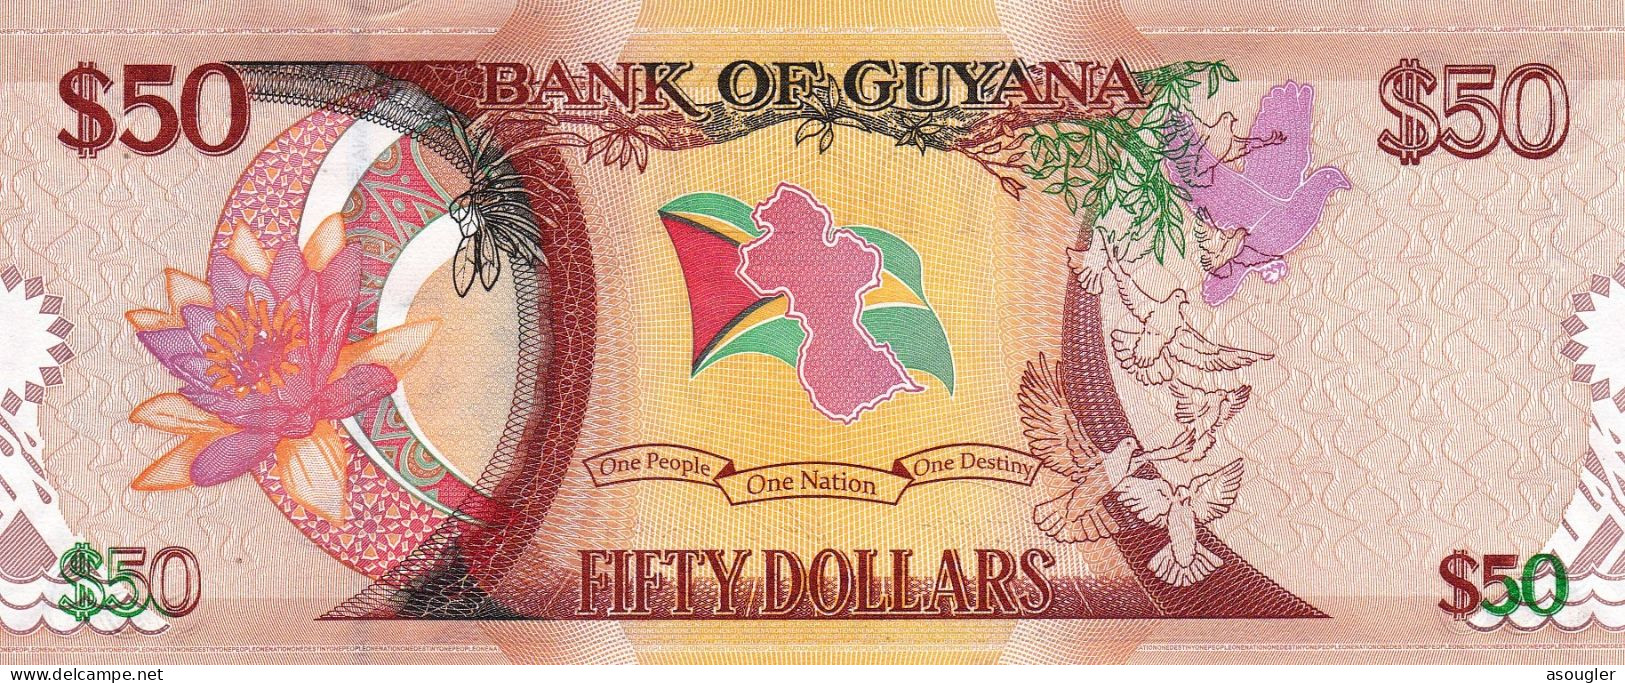 Guyana 50 DOLLARS 2016 UNC P- Commemorative Note "free Shipping Via Regular Air Mail (buyer Risk Only)" - Guyana